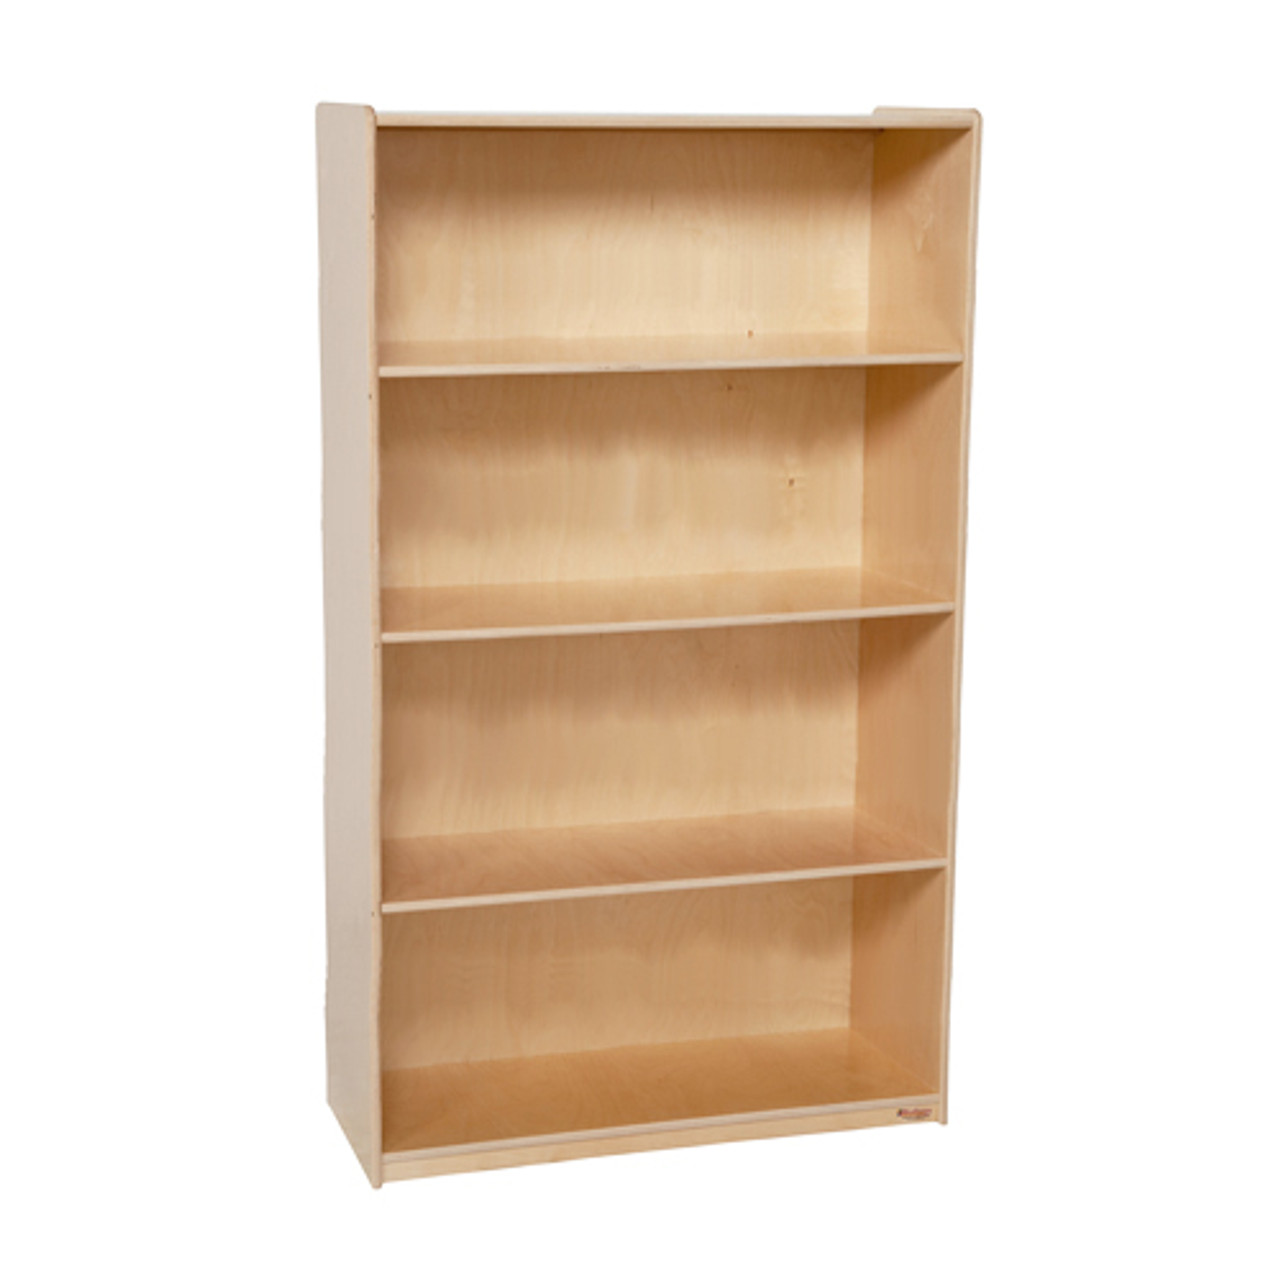 Wood Designs Wd13260 Multi Purpose Bookshelf 36 Inch Height Extra